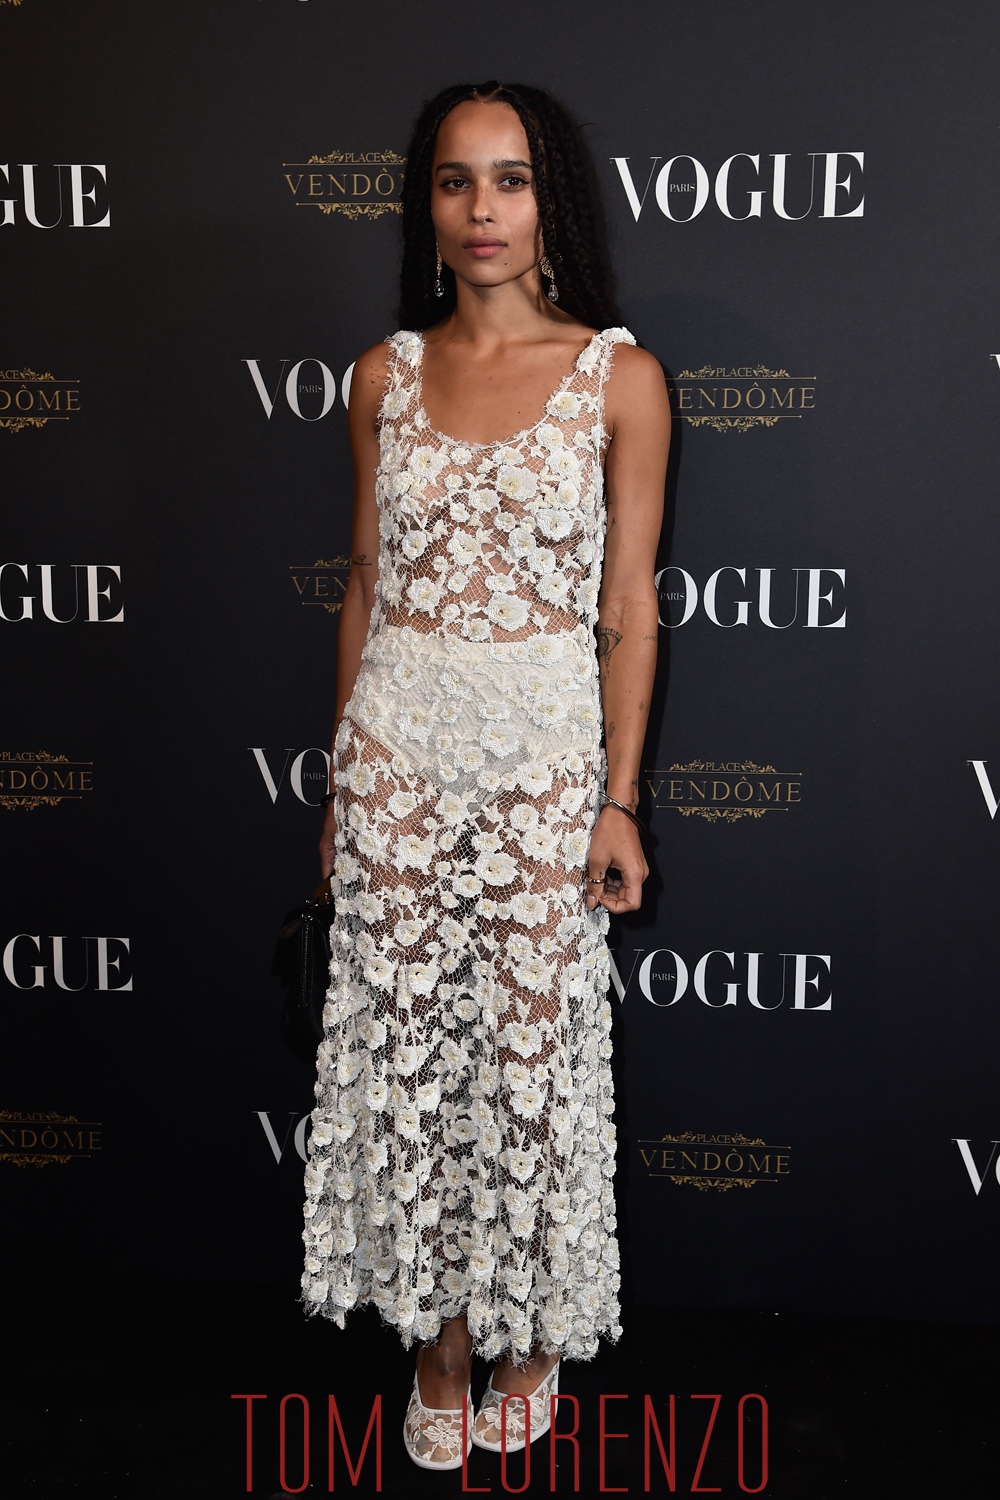 Zoe-Kravitz-Vogue-Anniversary-Party-2015-Balenciaga-Red-Carpet-Fashion-Tom-Lorenzo-Site (1)